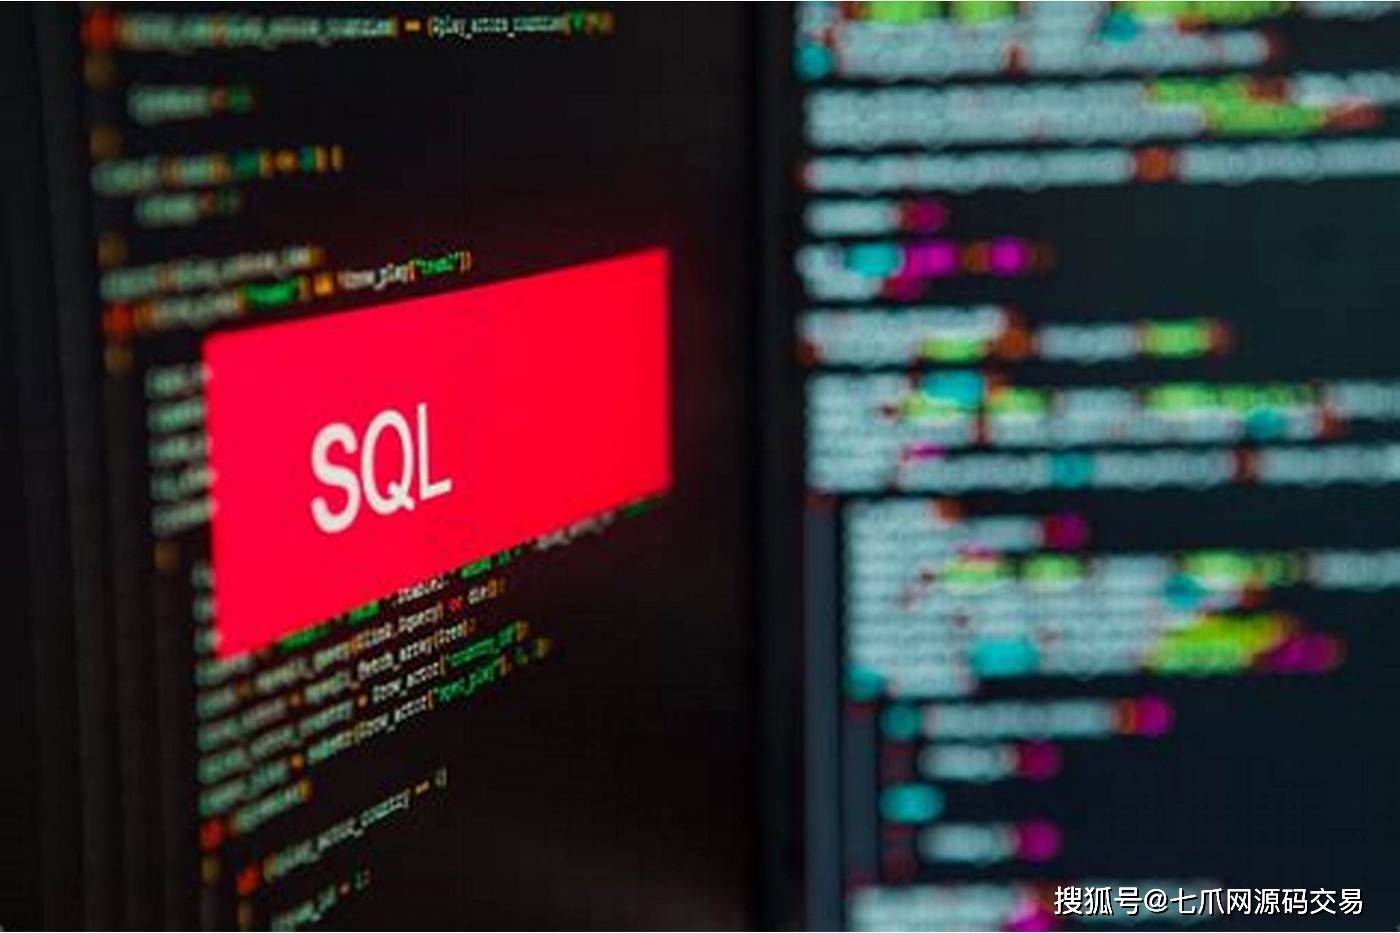 SQL SERVER 比较两个数据库的差异性